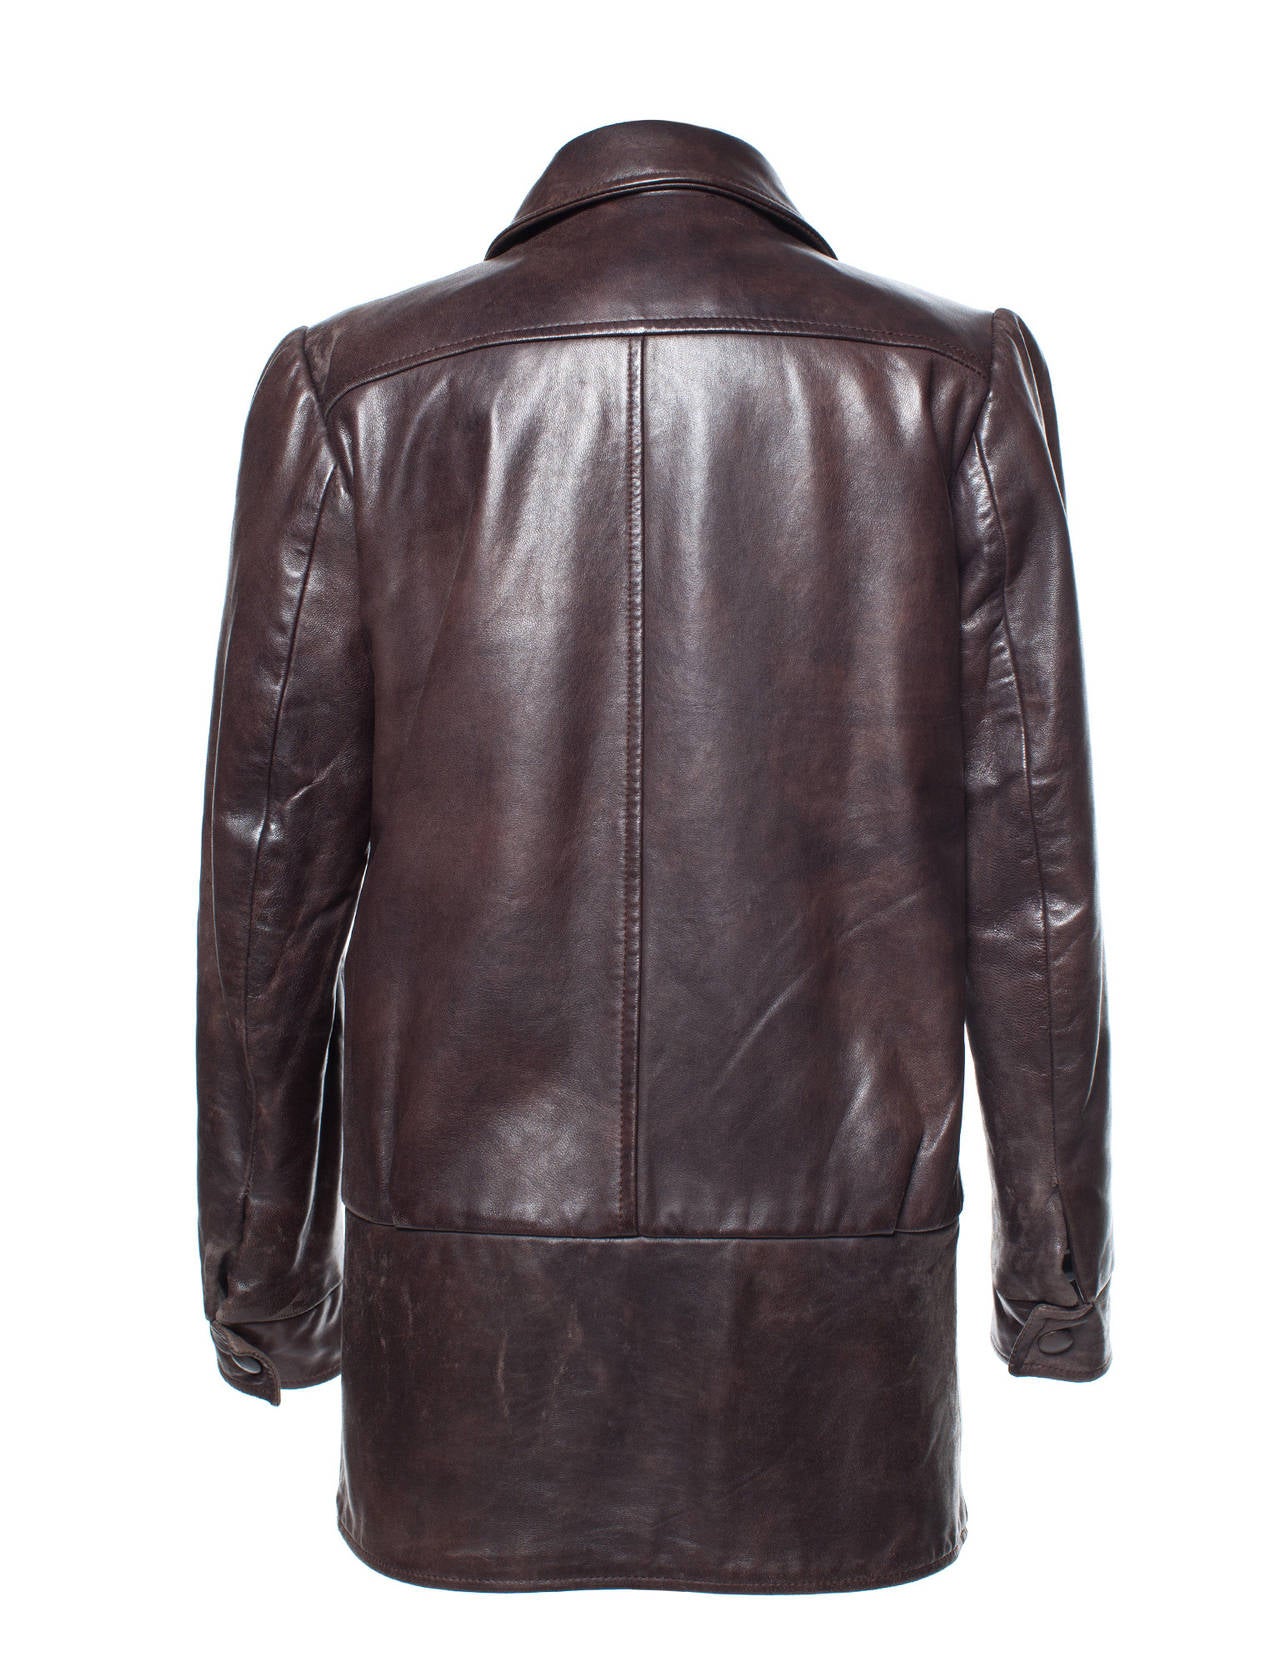 Martin Margiela Vintage Blouson Leather Jacket FW'04, Sz. S In Excellent Condition For Sale In Berlin, DE